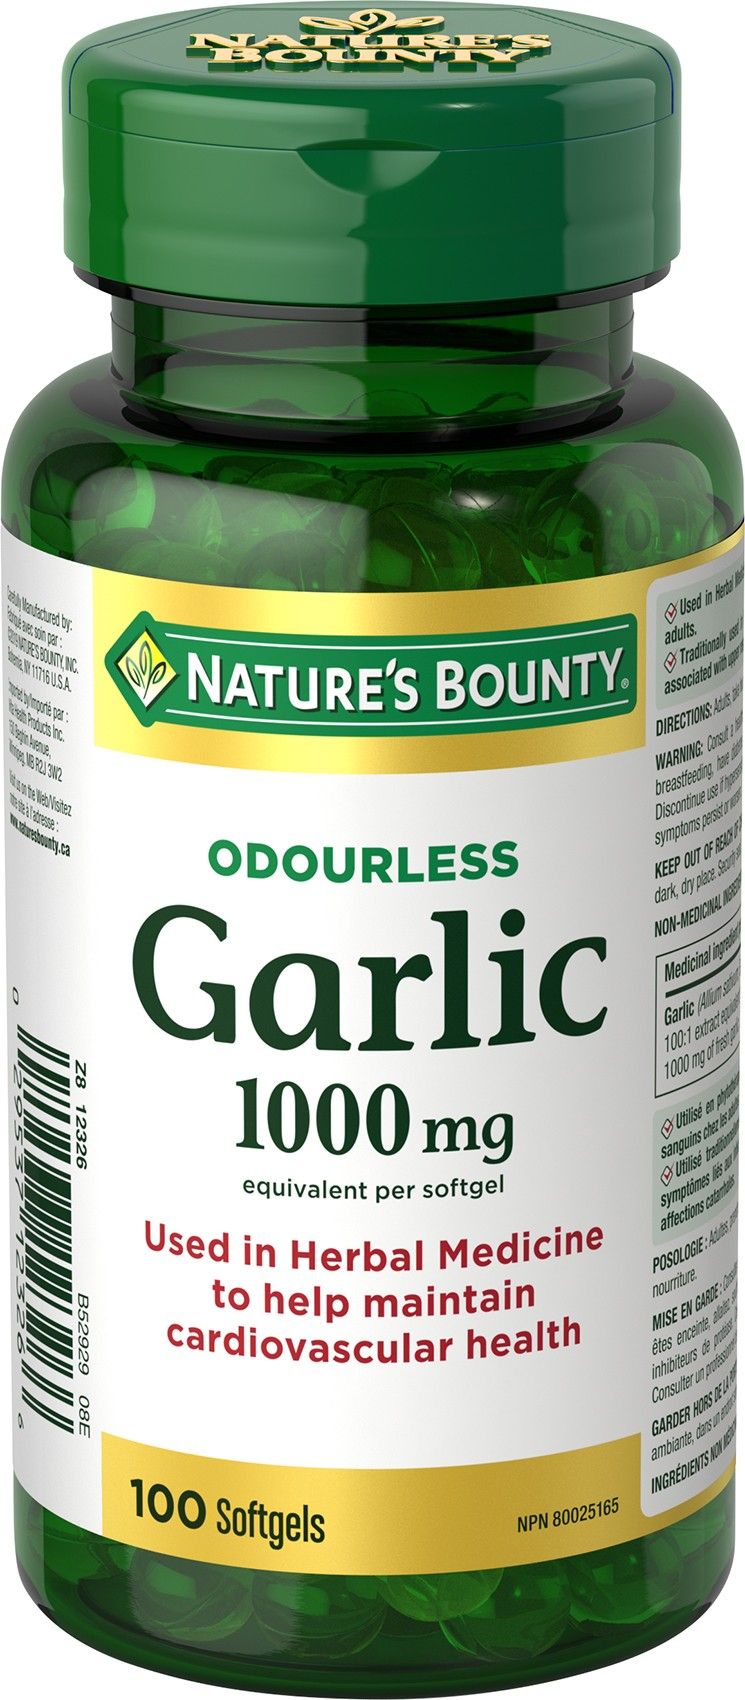 Nature's Bounty Odourless Garlic Softgels